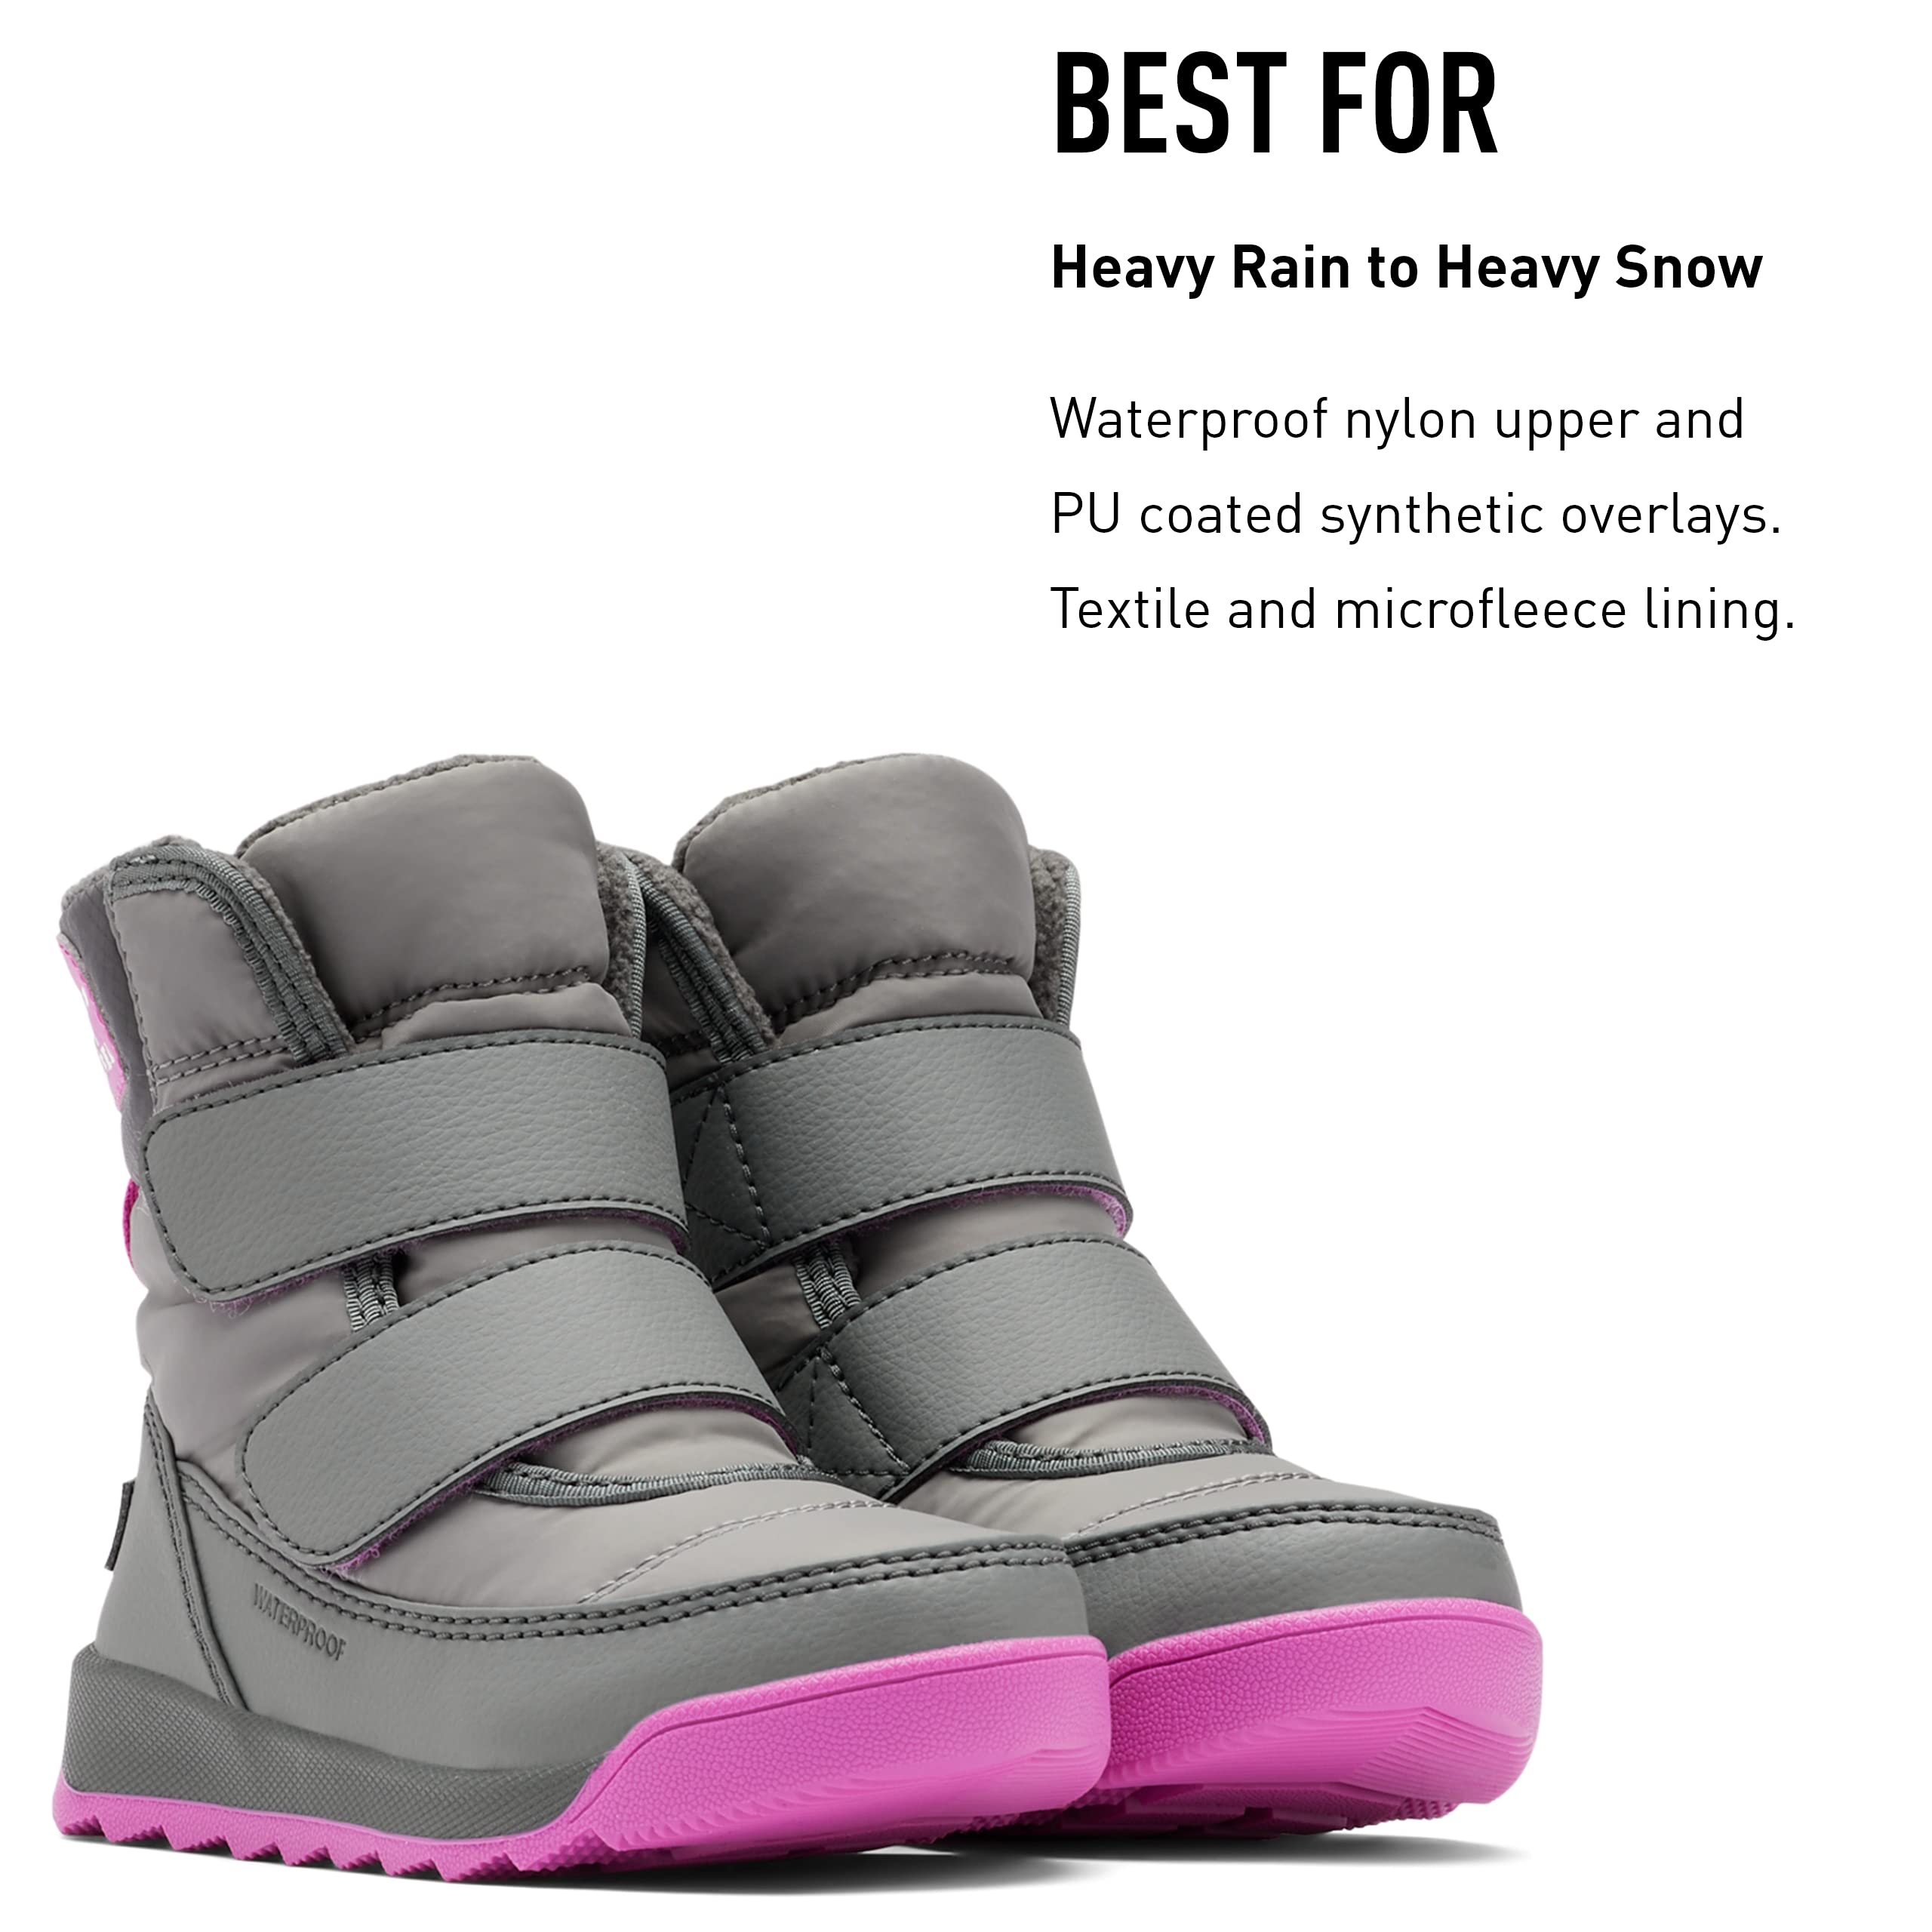 Sorel Unisex-Child Winter Boots Snow